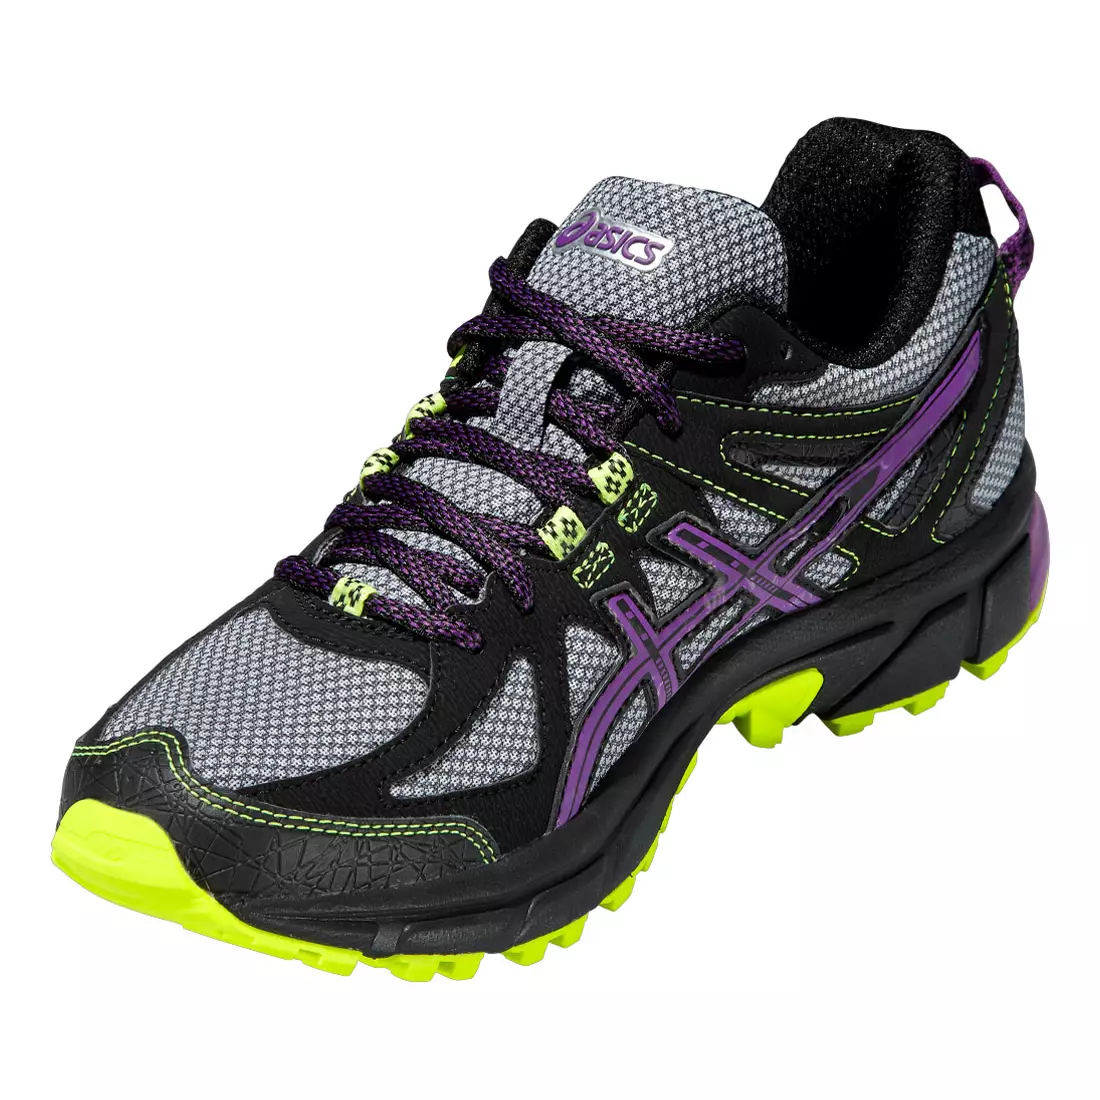 ASICS GEL-SONOMA women's trail running shoes 1133